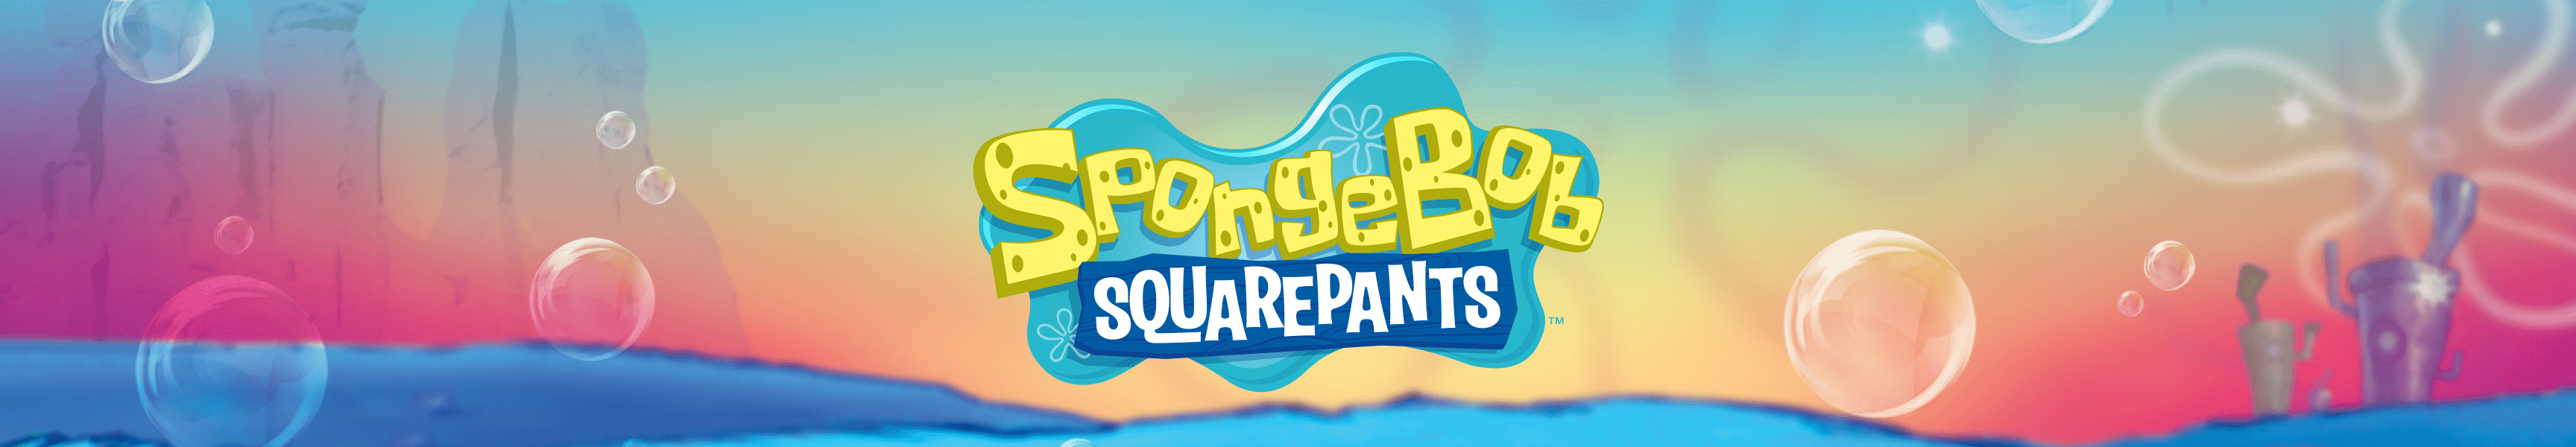 SpongeBob SquarePants Movie Night